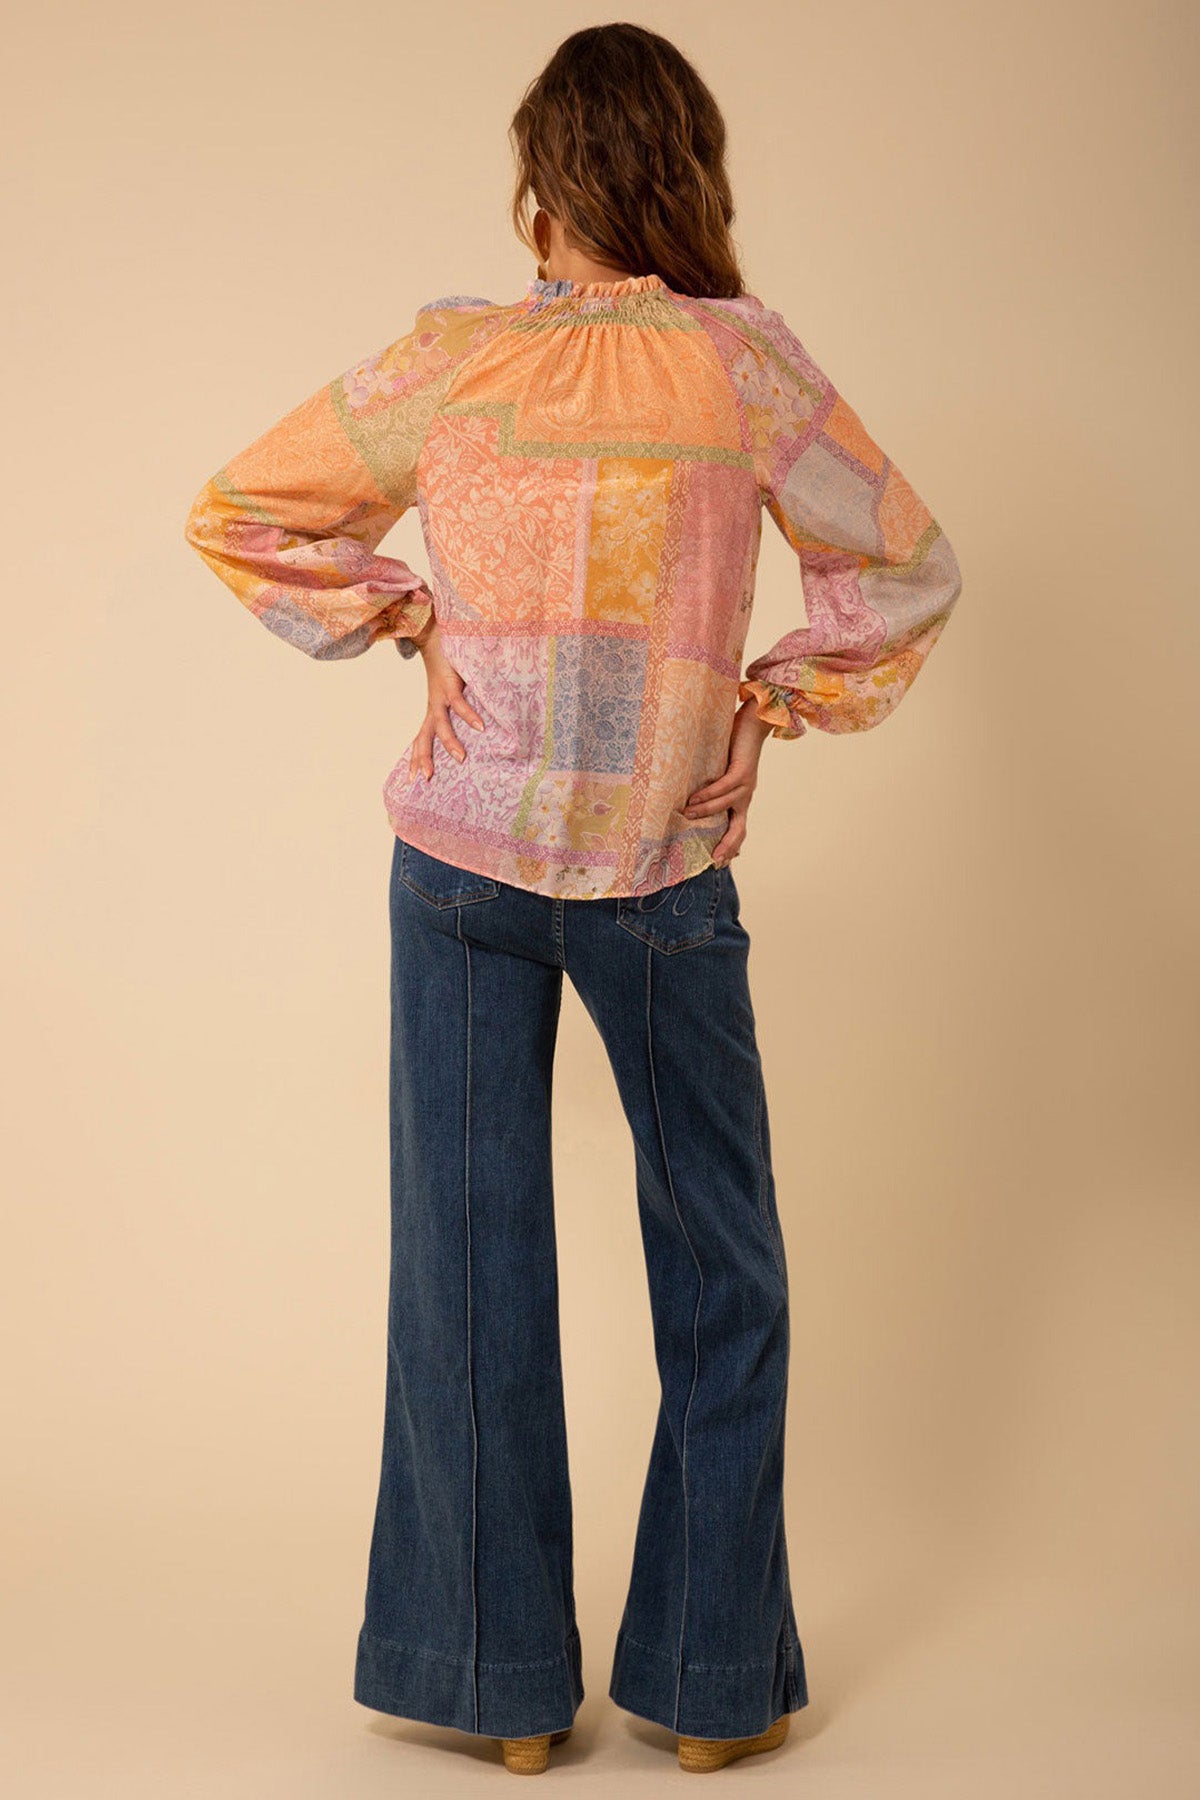 Hale Bob Gemma Renkli Desenli İpek Bluz